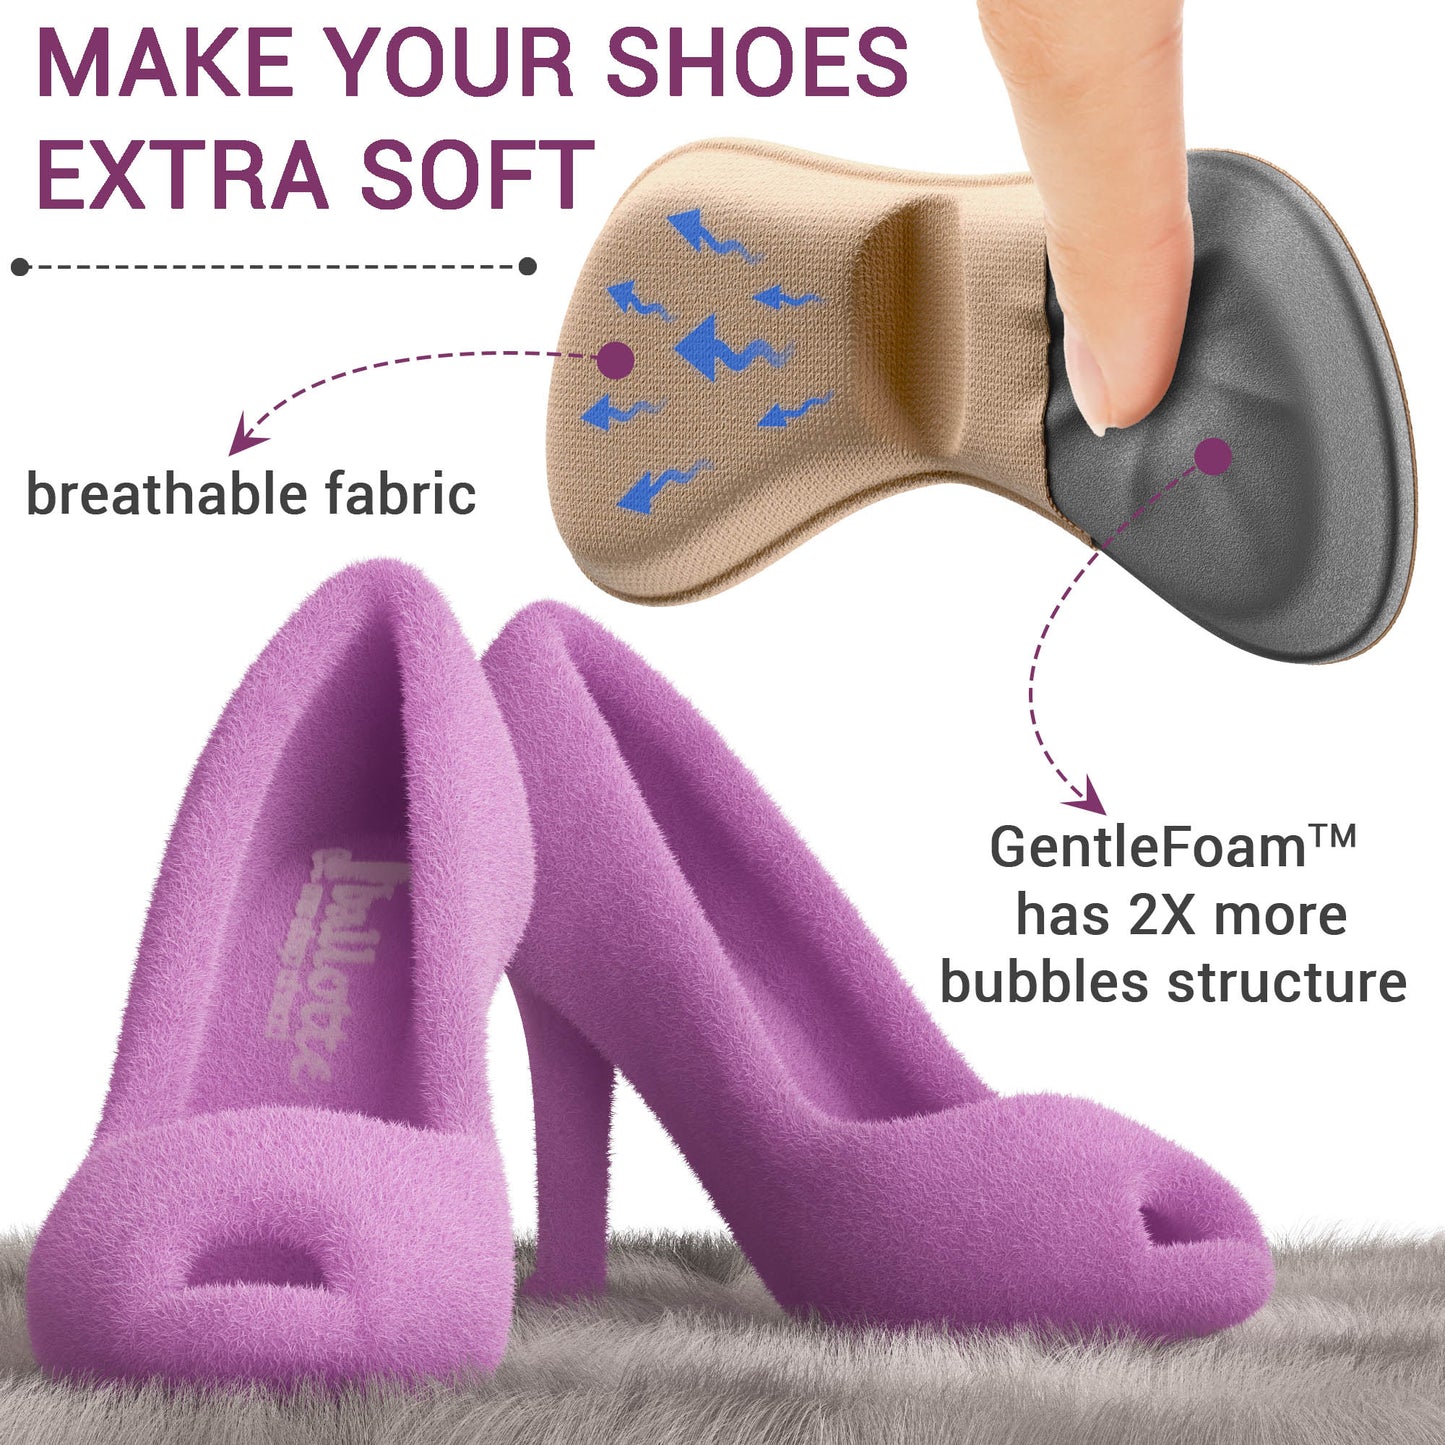 Extra soft heel grips